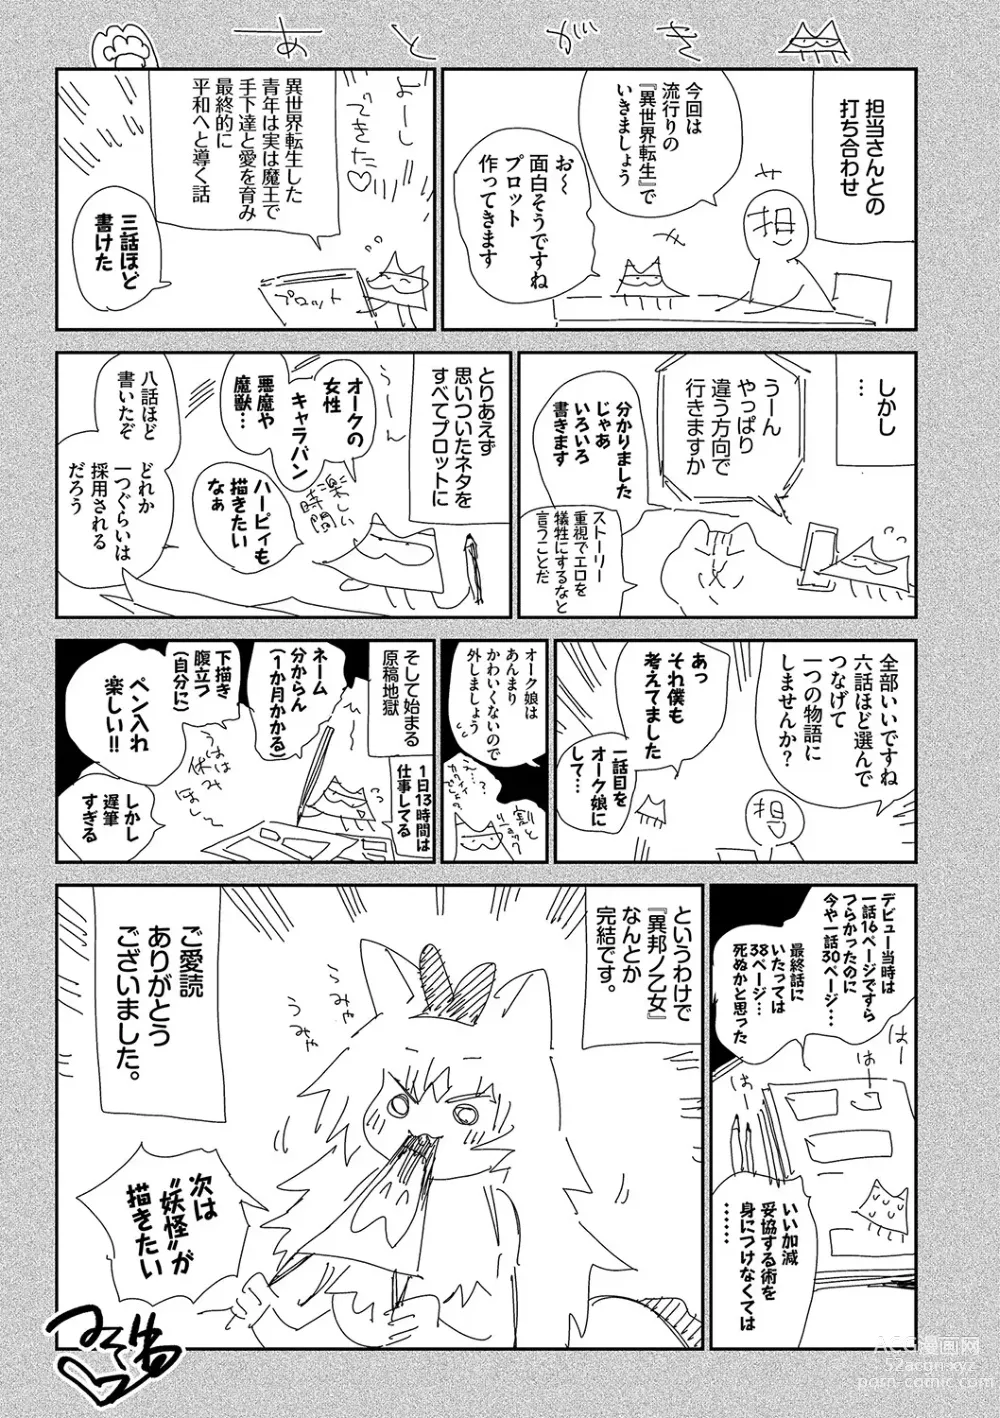 Page 234 of manga 異邦ノ乙女